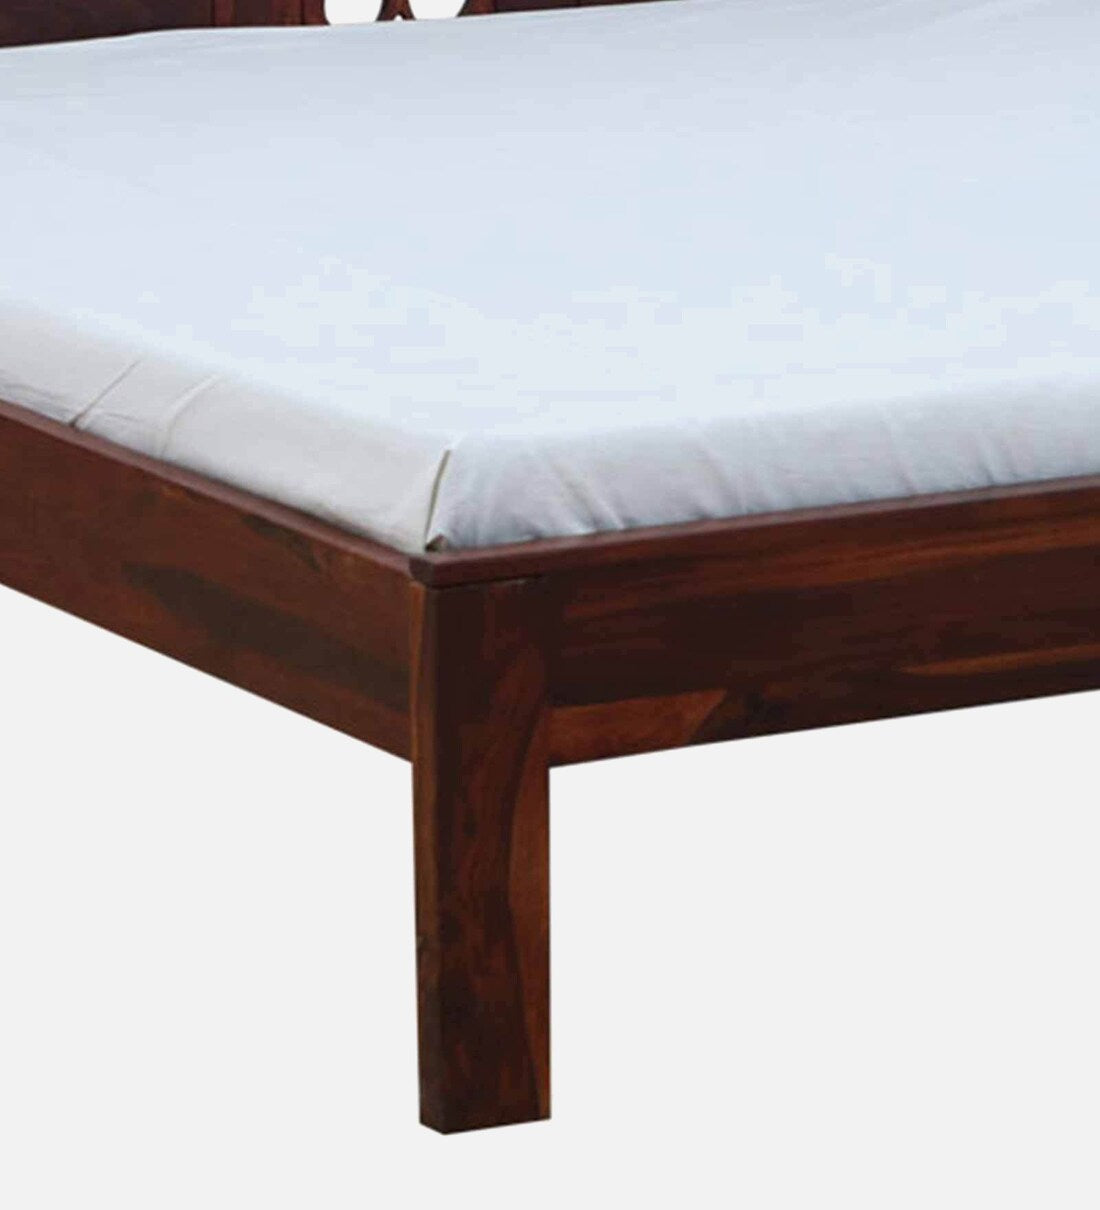 Sheesham Wood King Size Bed in Scratch Resistant Honey Oak Finish